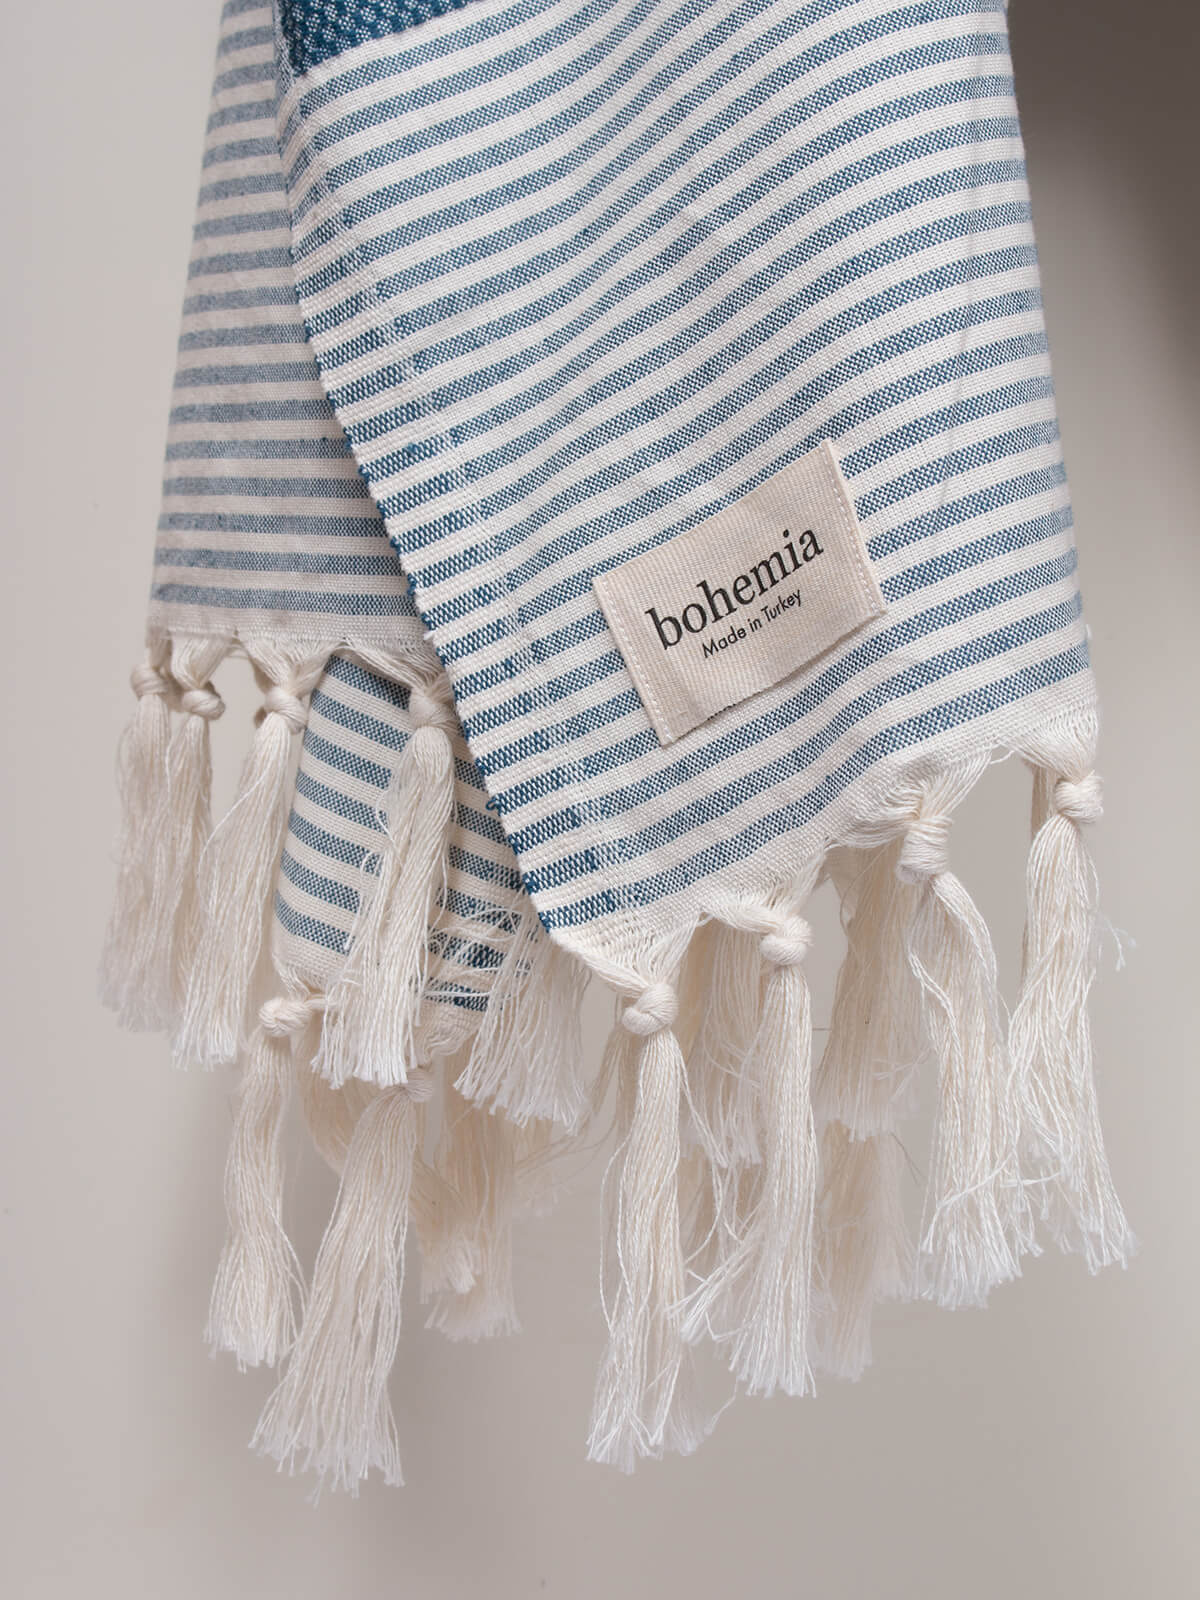 The Amalfi Hammam Towel in Indigo by Bohemia Design